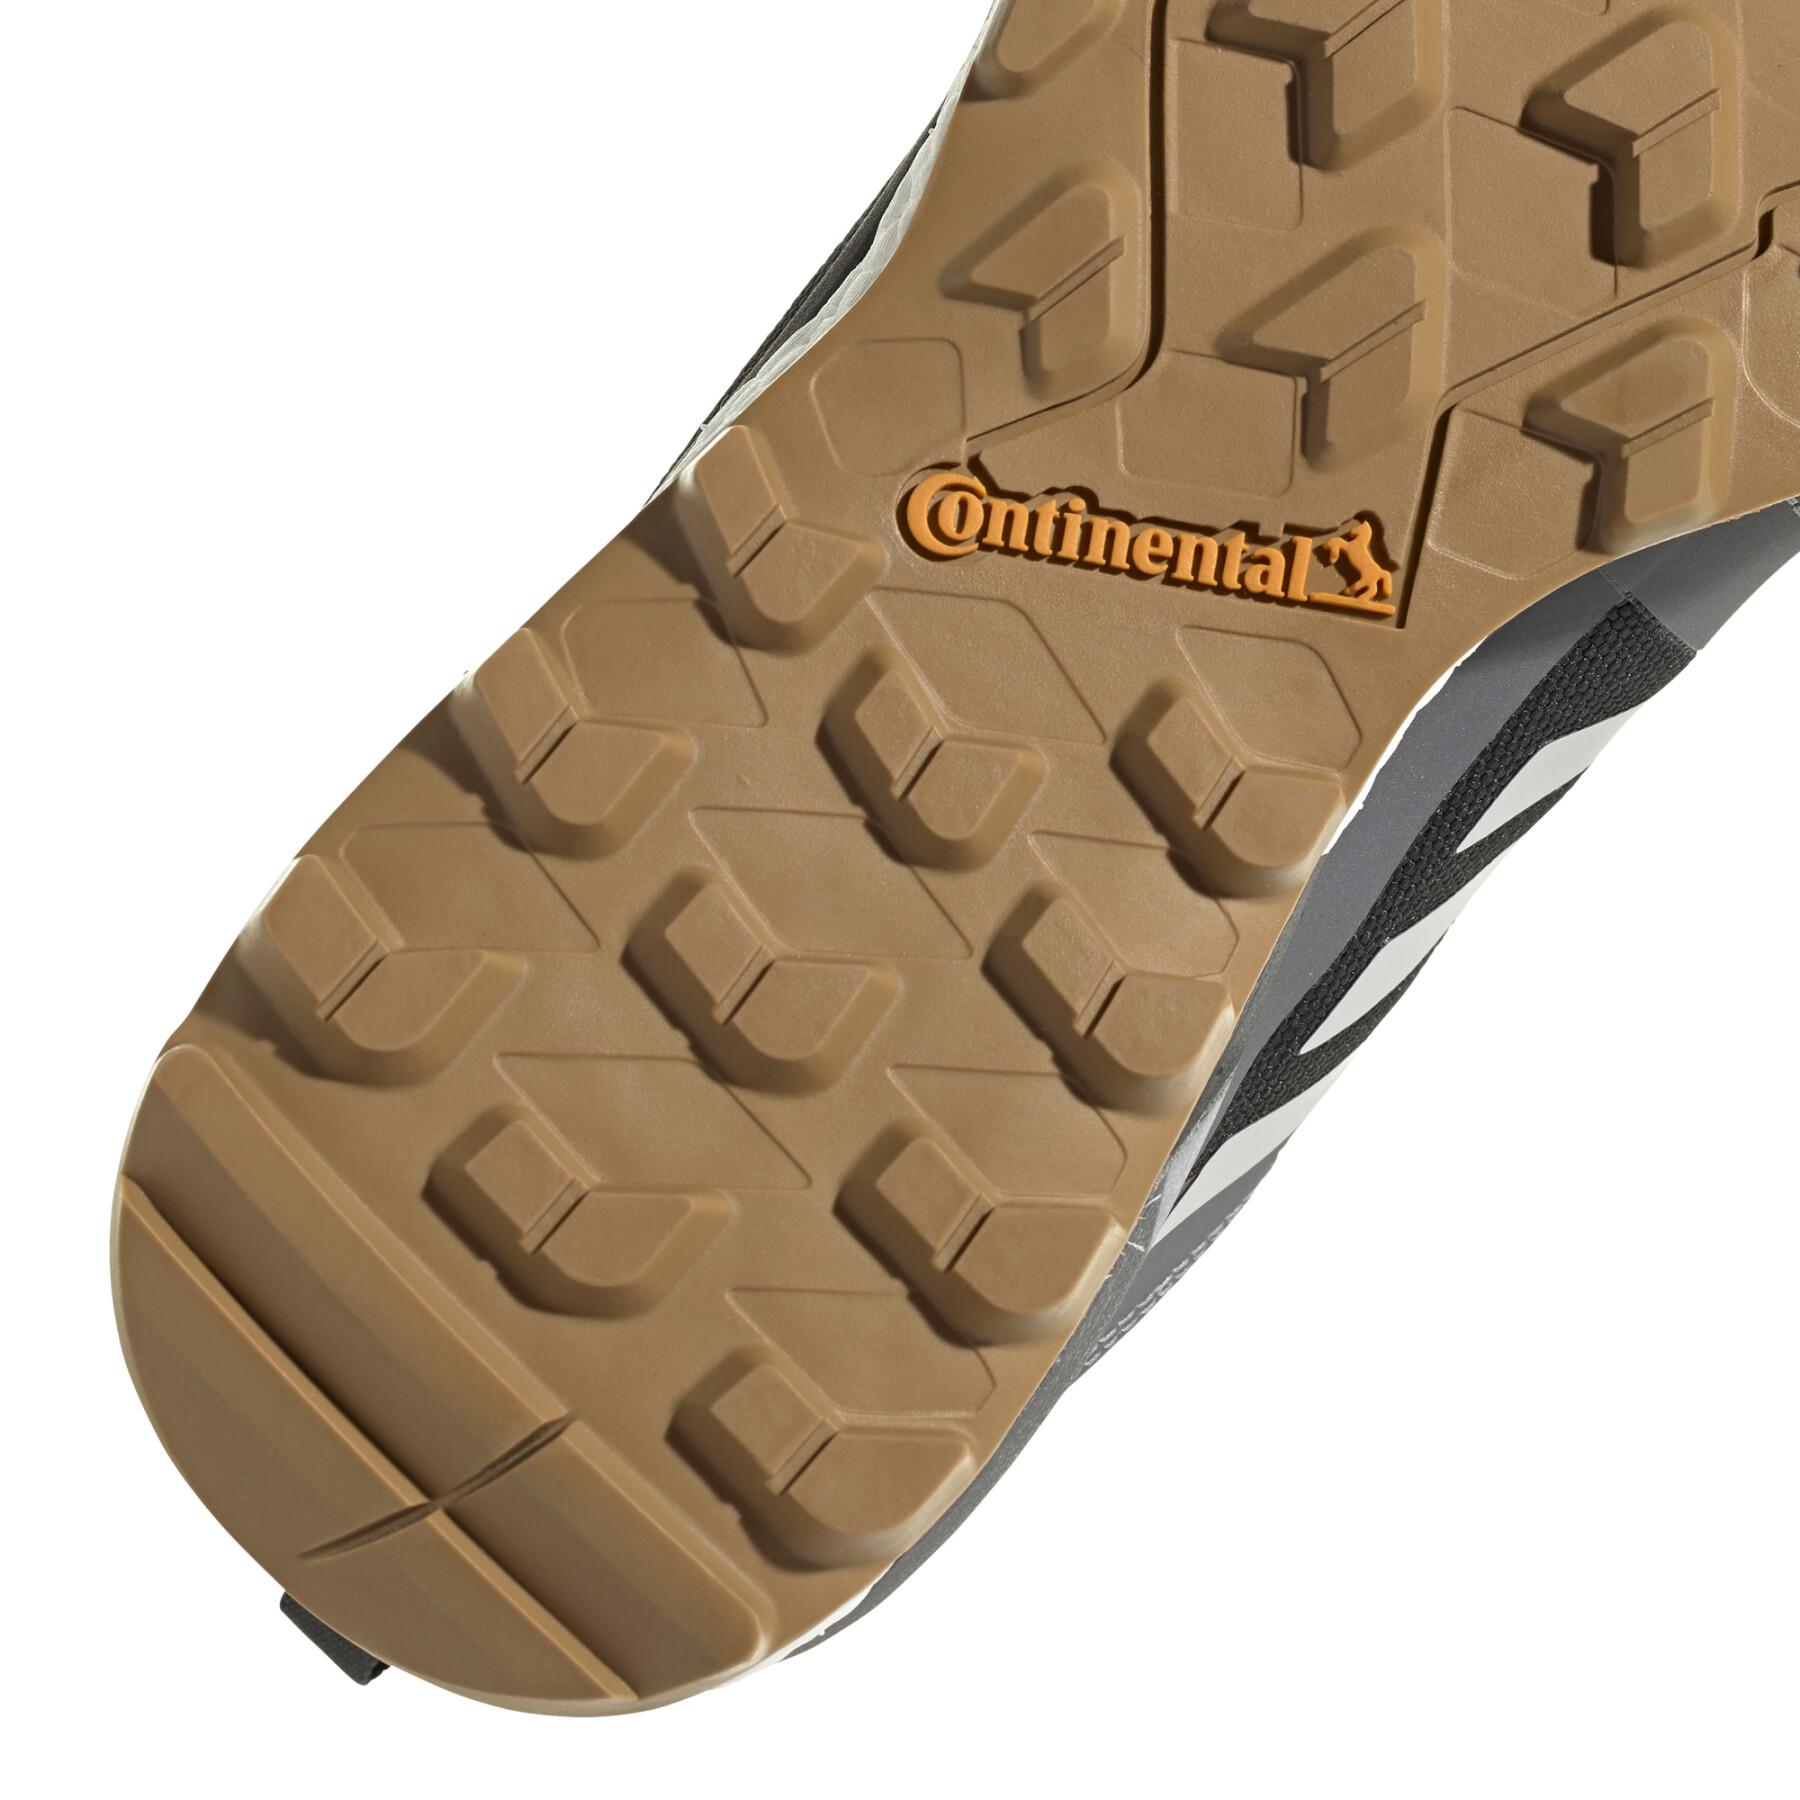 Trail shoes adidas Terrex Skychaser GTX